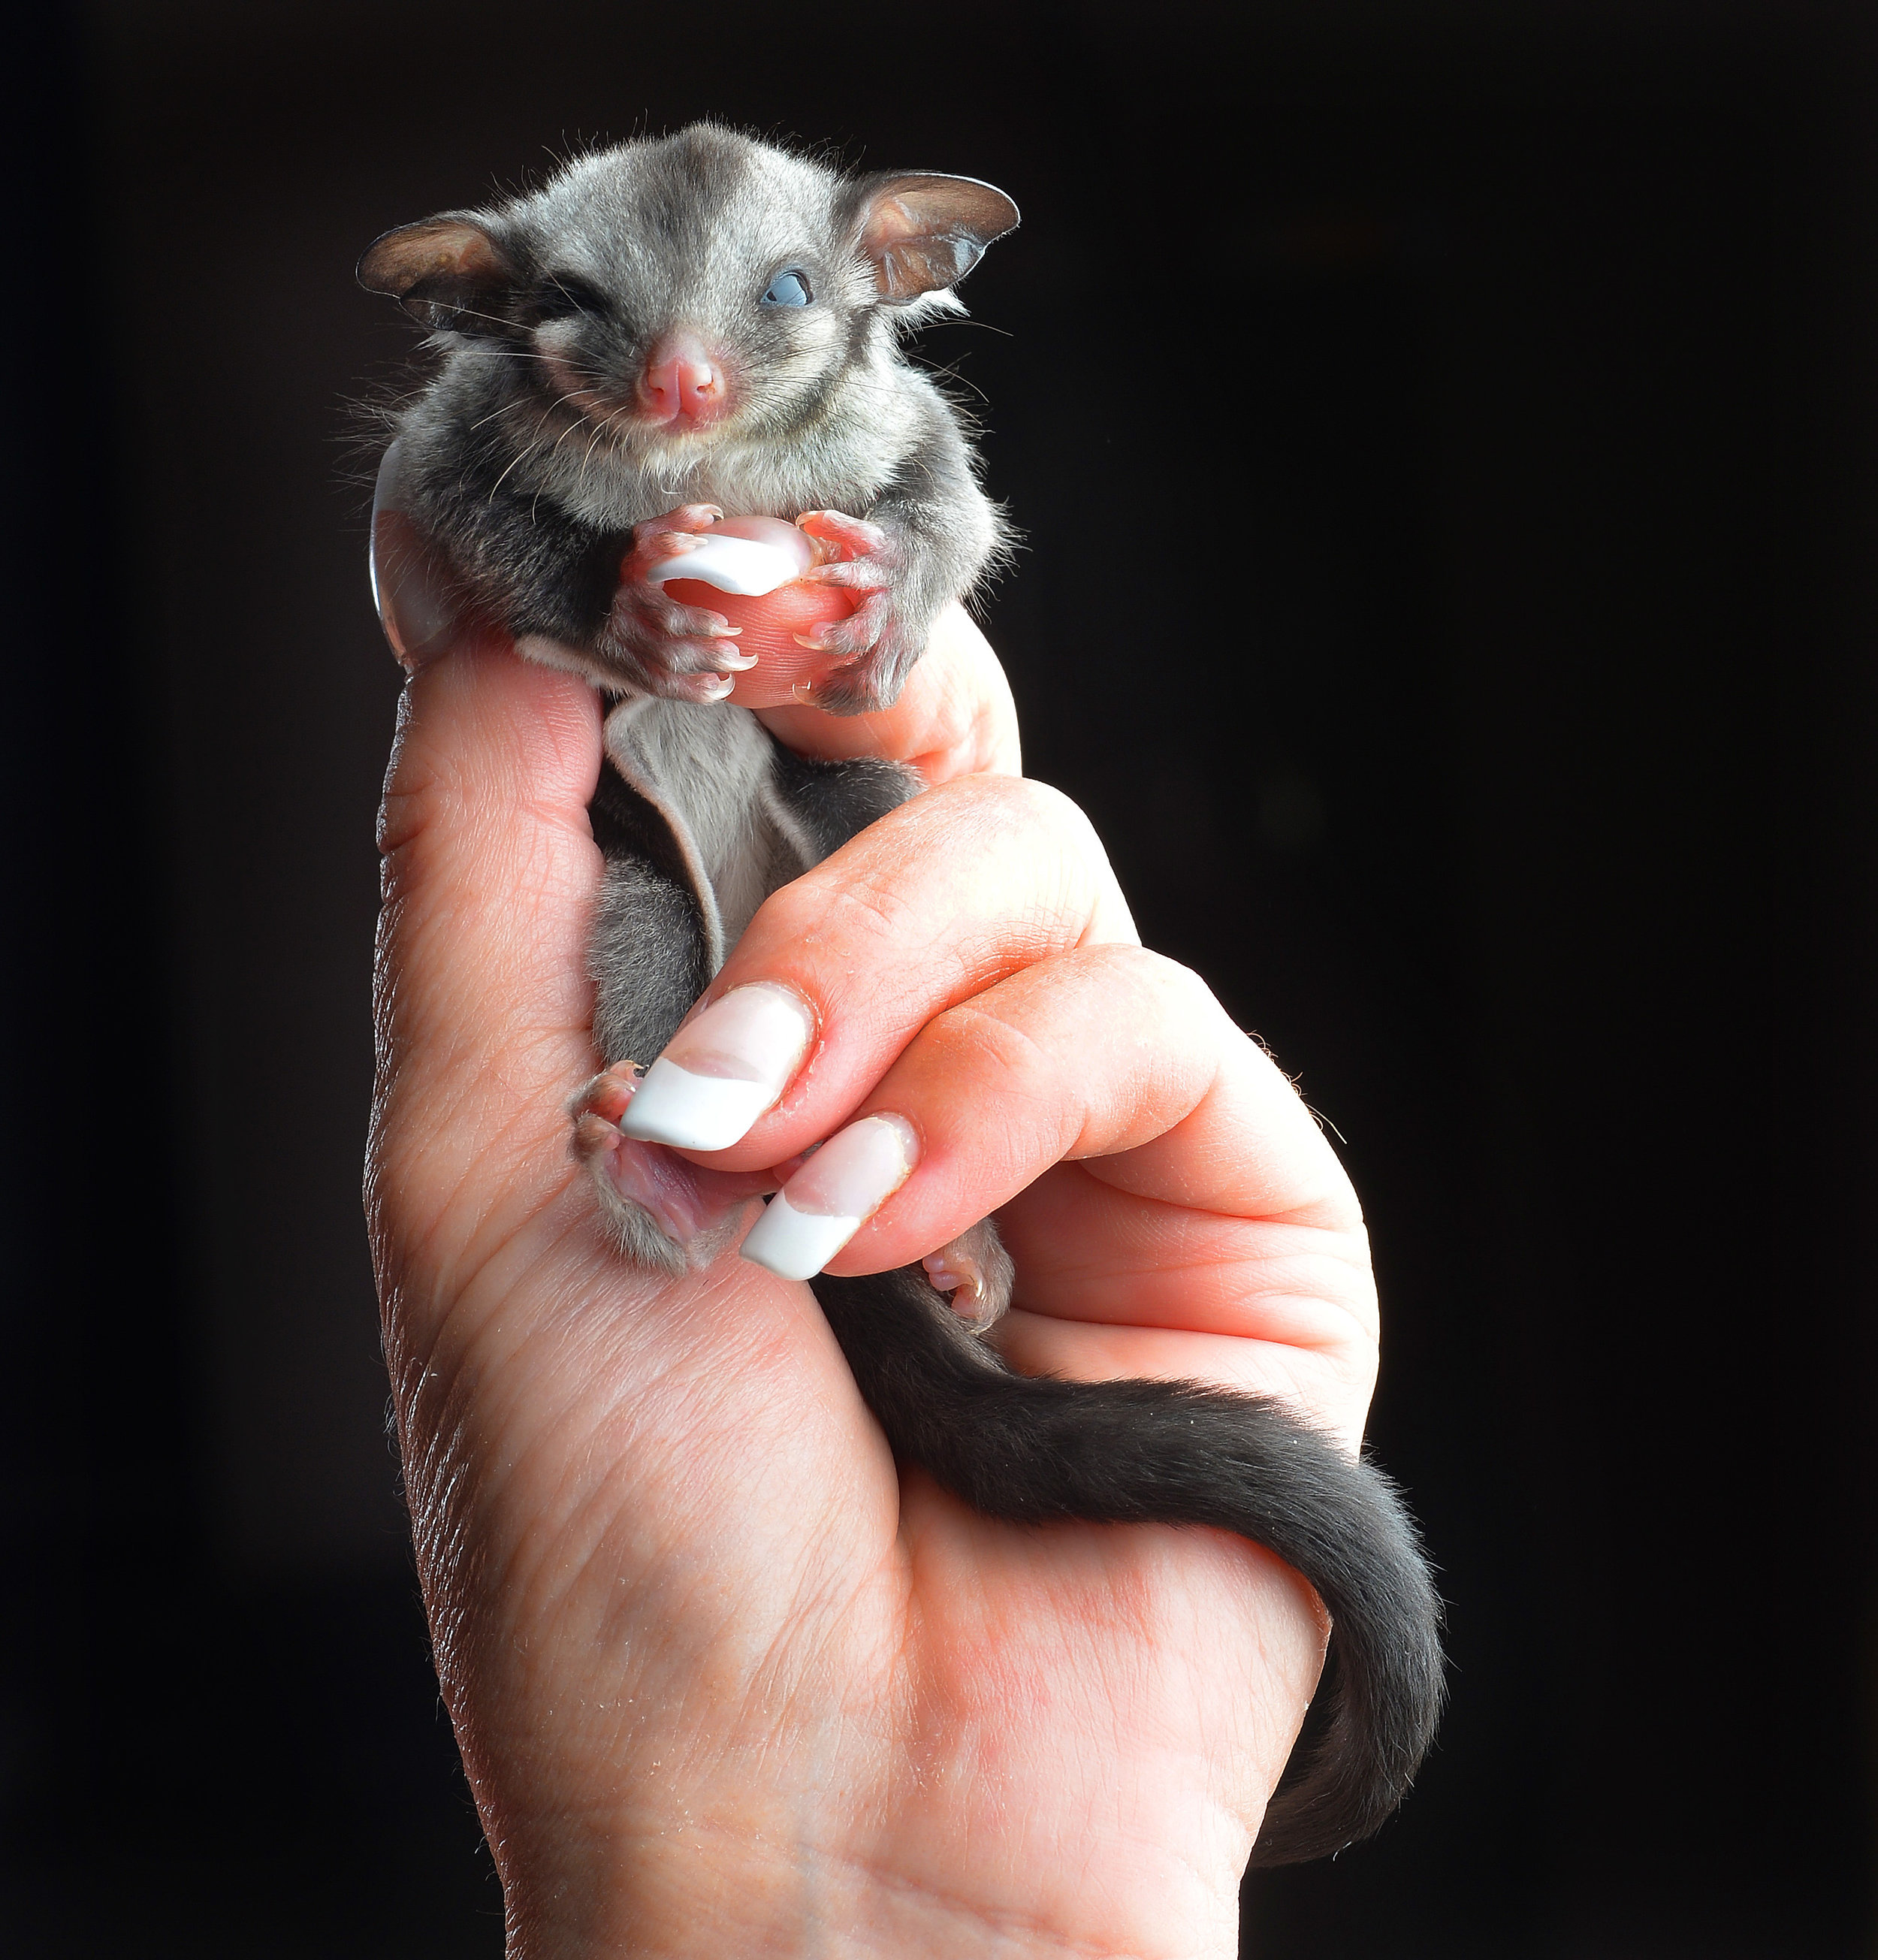 CHP_Export_53330028_%27%27 Sugar %27%27 the sugar glider possum   cools down at the Wild about Wildlife.jpg